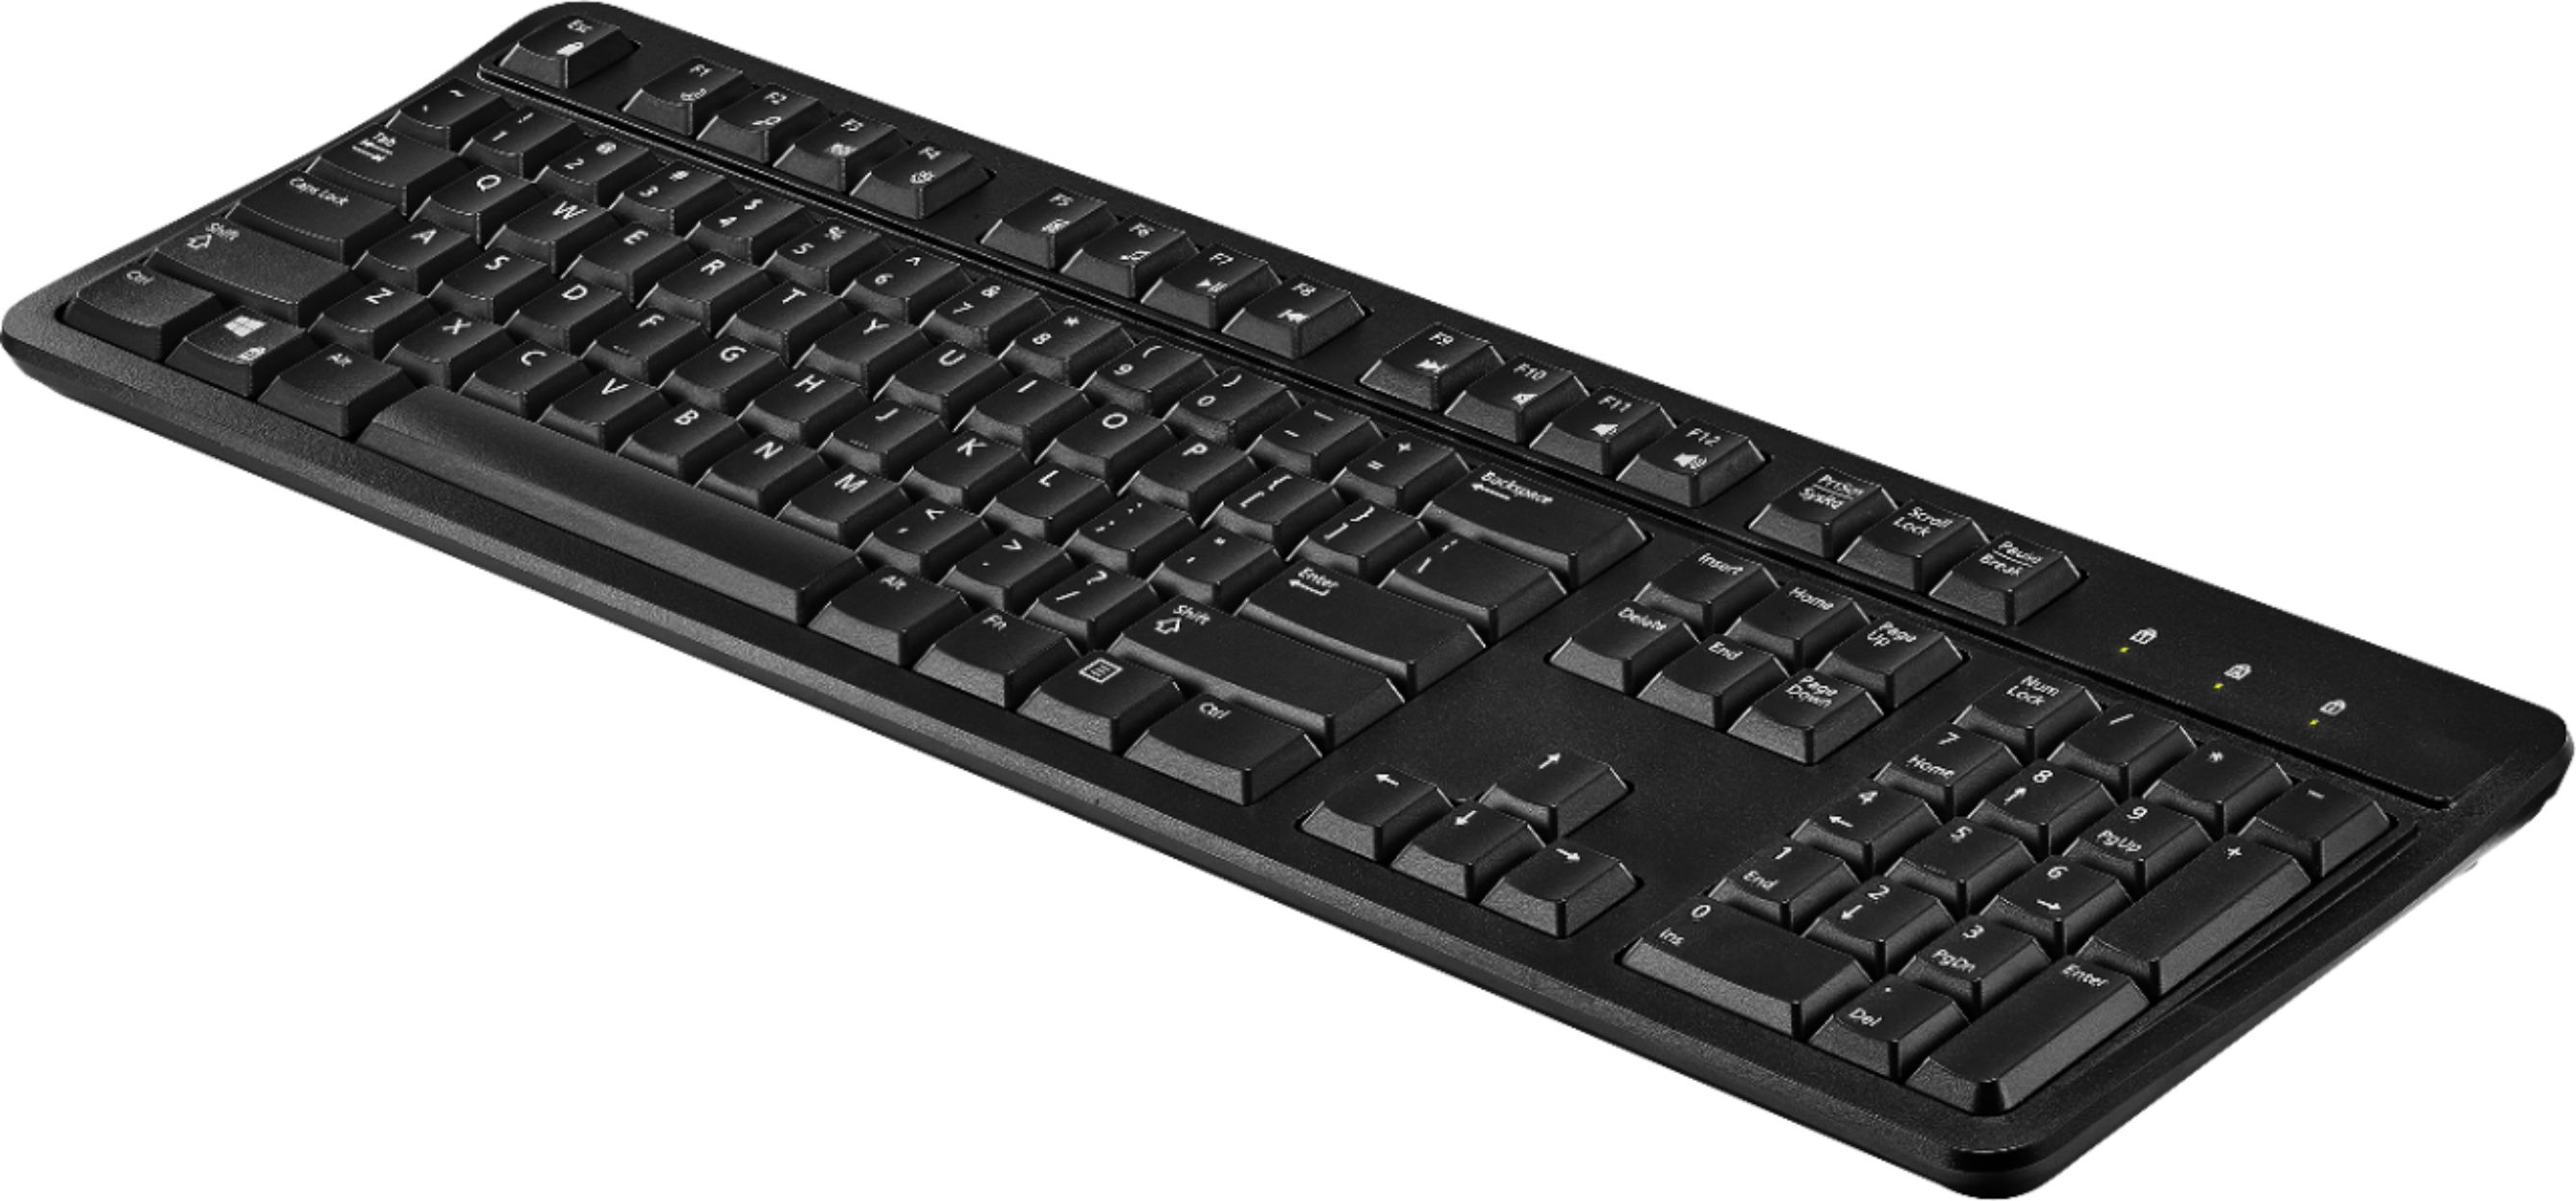 Best Buy essentials™ - USB Wired Keyboard - Black $6.49 Free Pickup